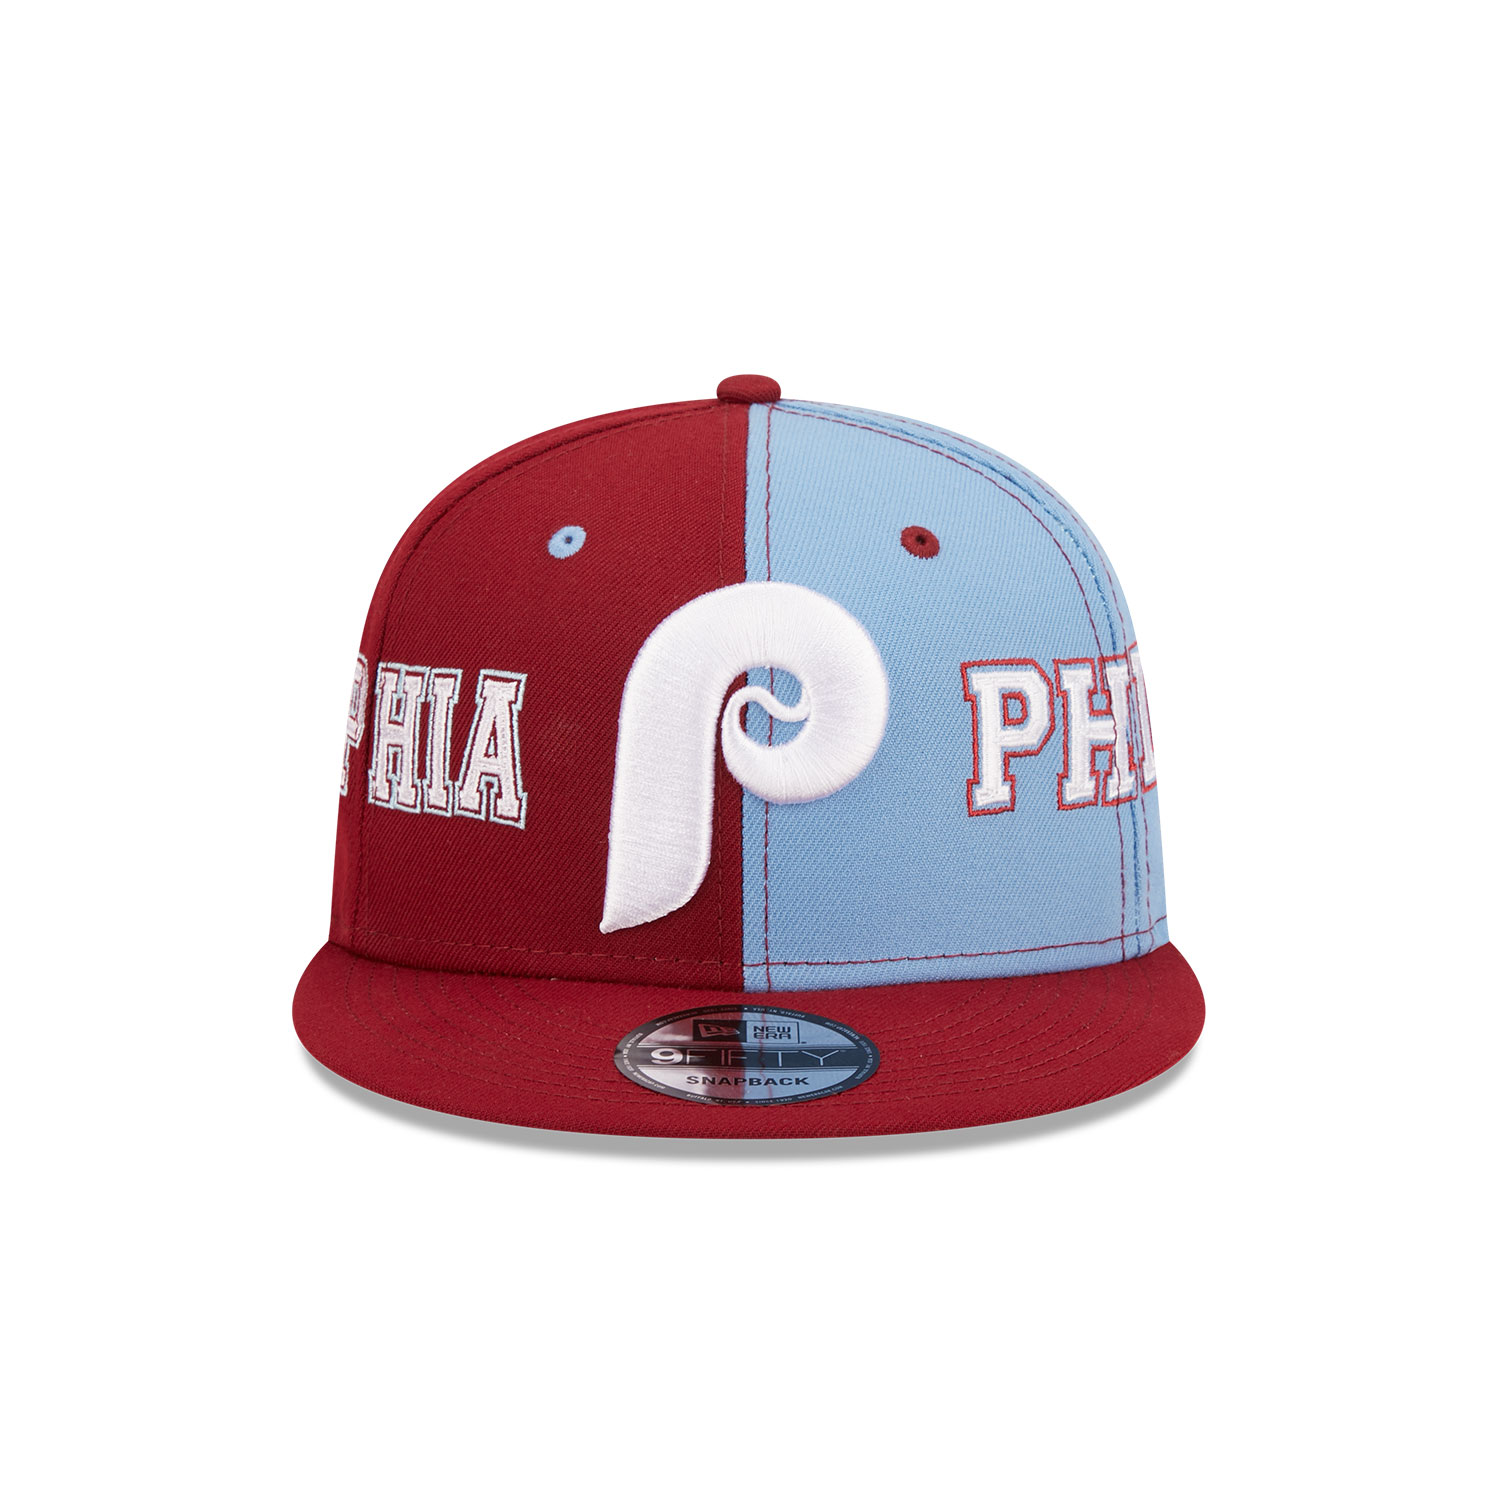 Philadelphia Phillies Teamsplit Red 9FIFTY Snapback Cap